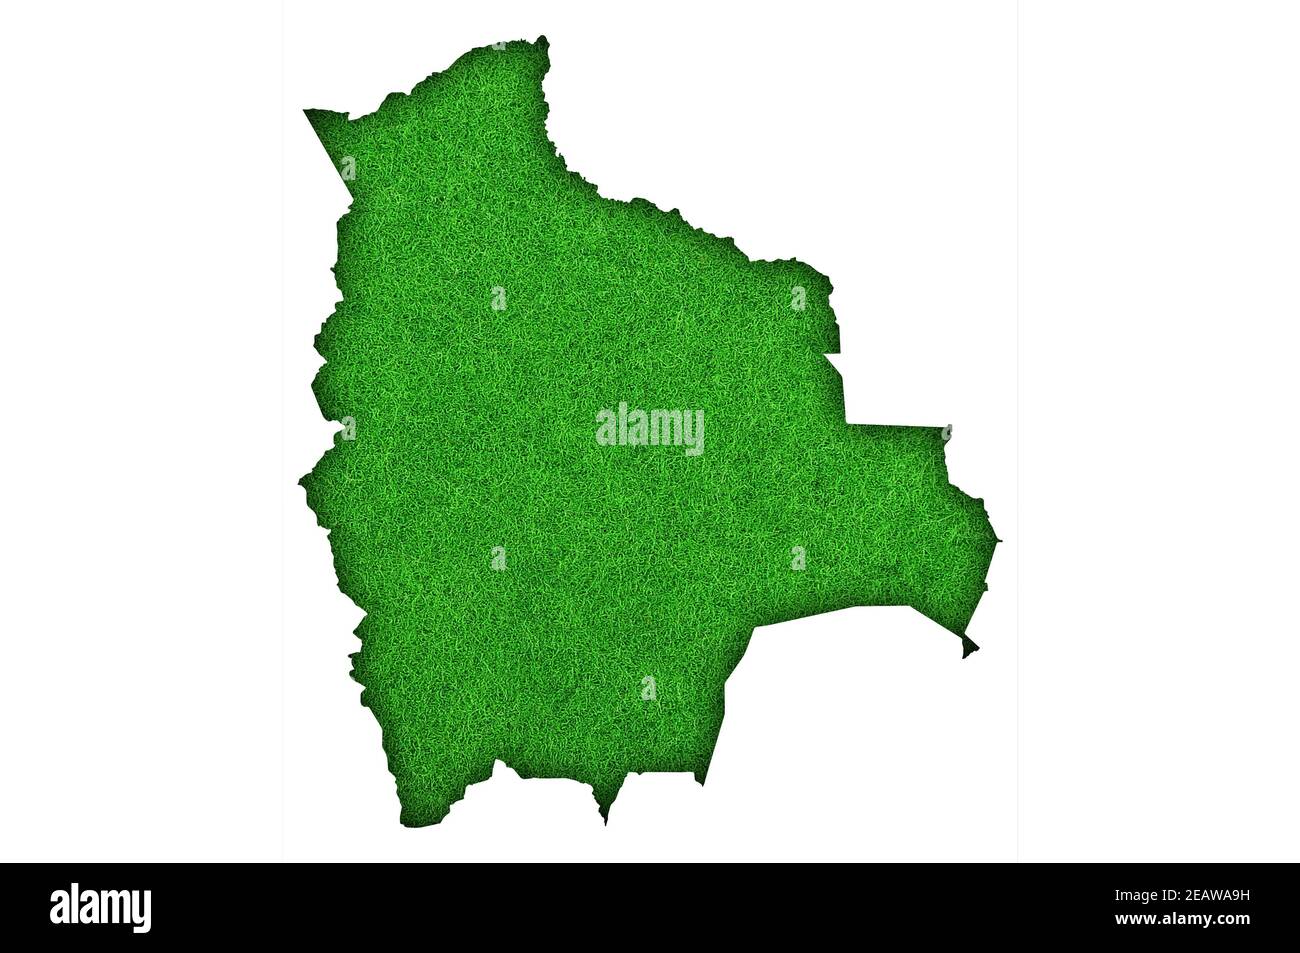 Map of Bolivia on green felt Stock Photo